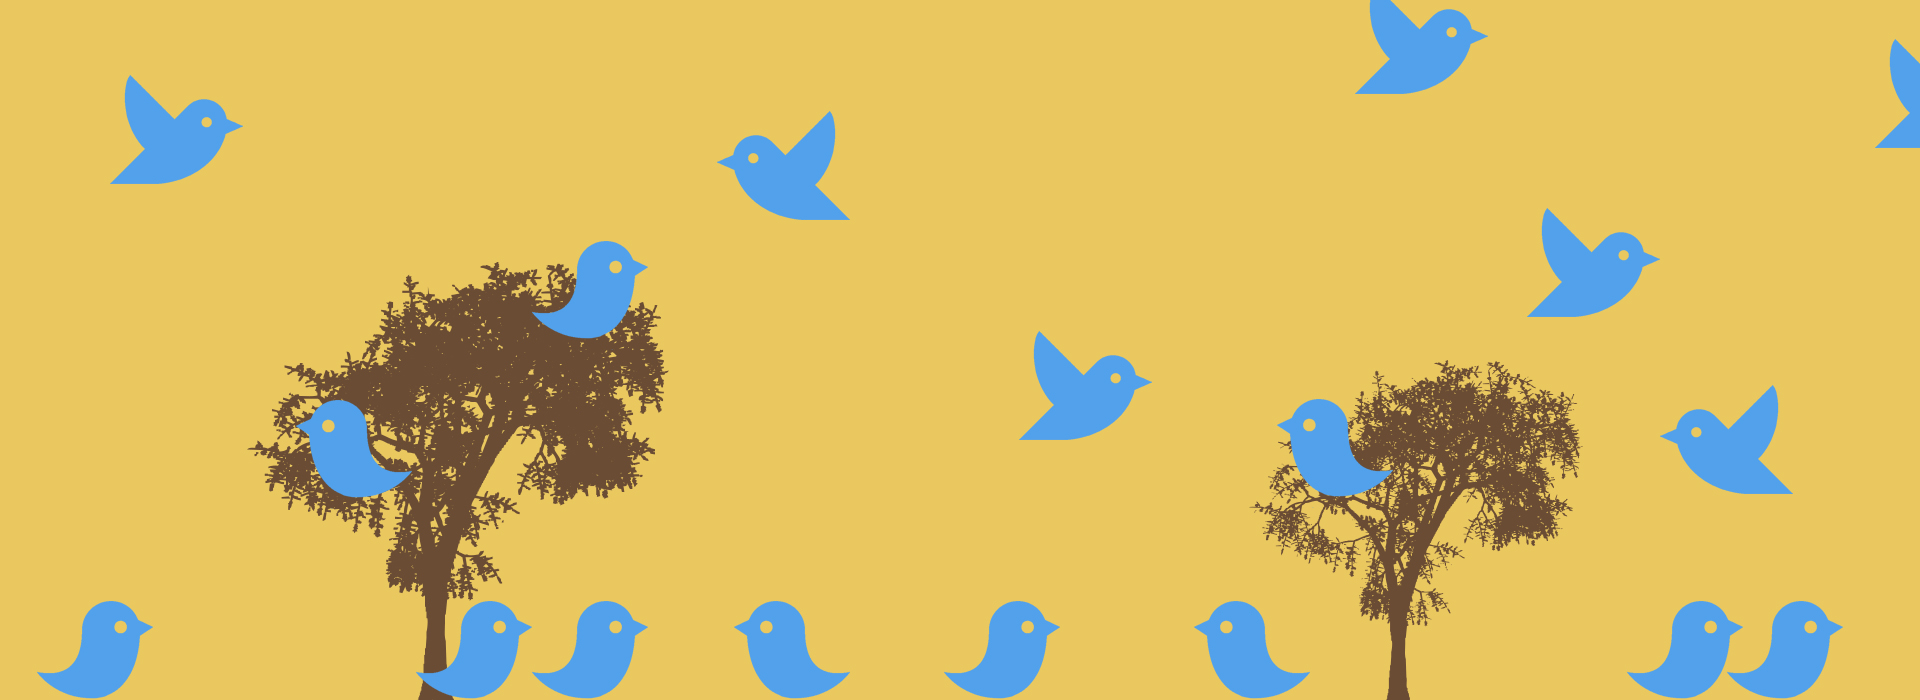 Lots of Twitter birds crowd onto trees